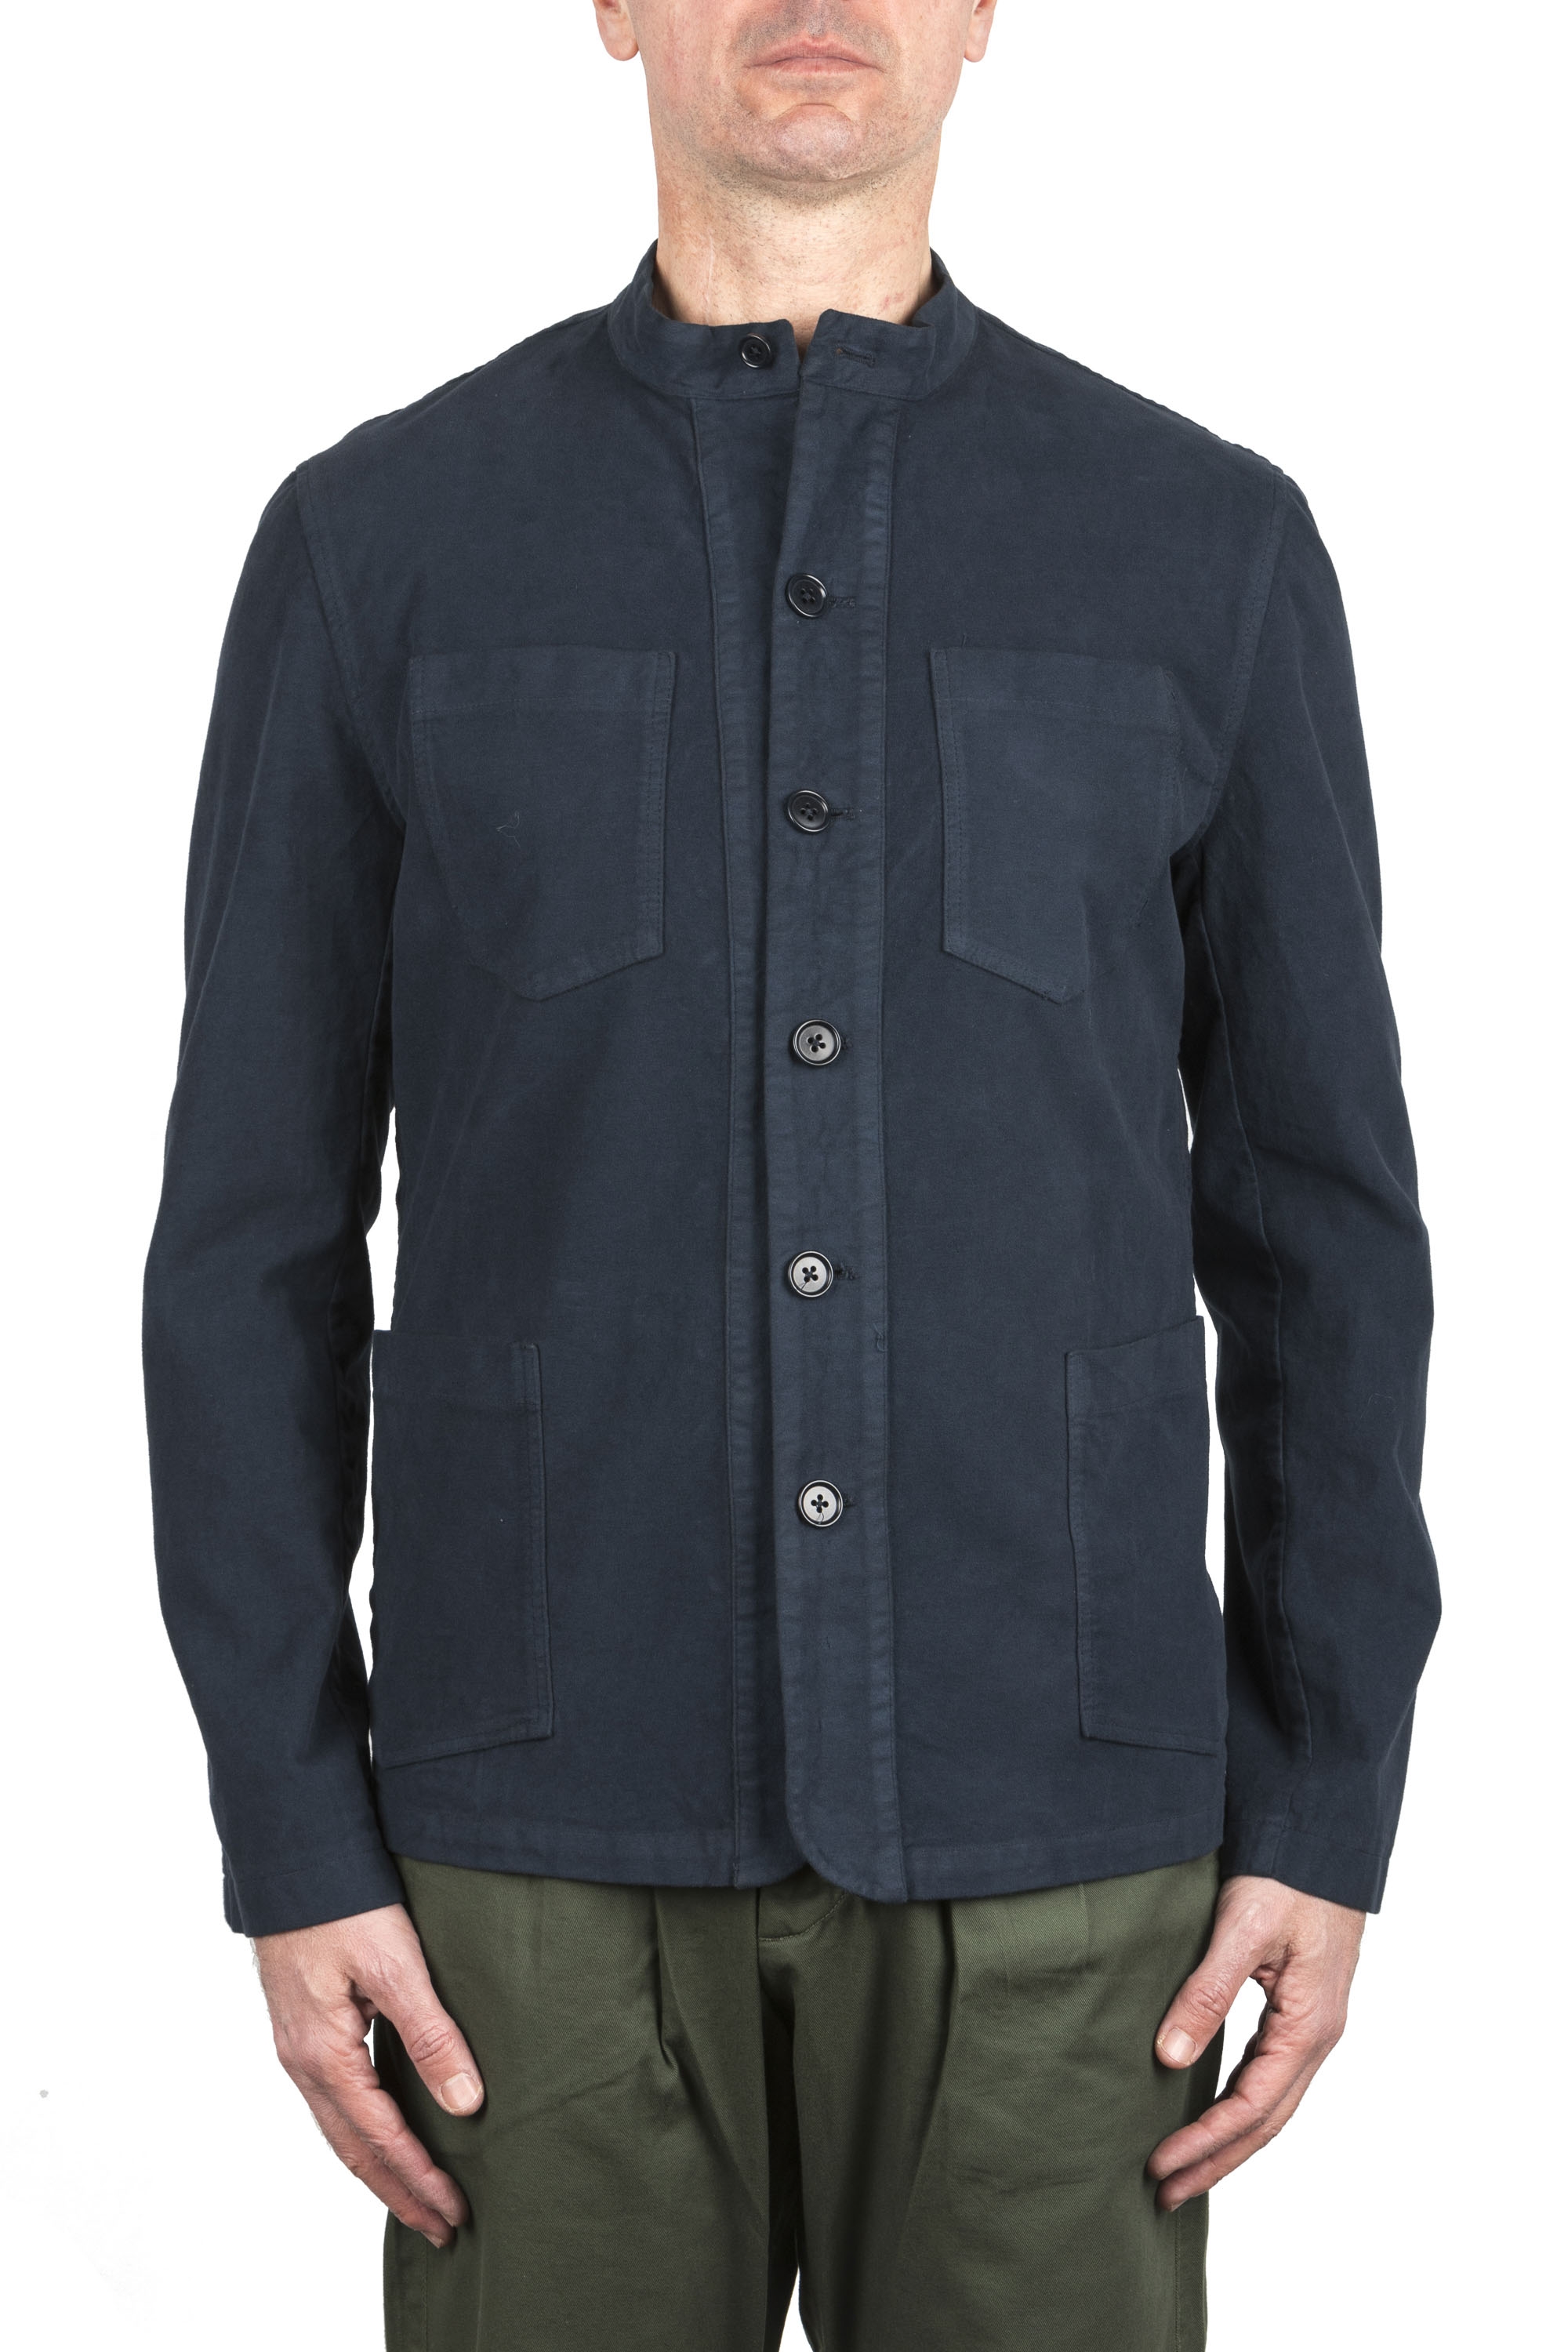 SBU 04929_24SS Mandarin collar sartorial work jacket navy blue 01